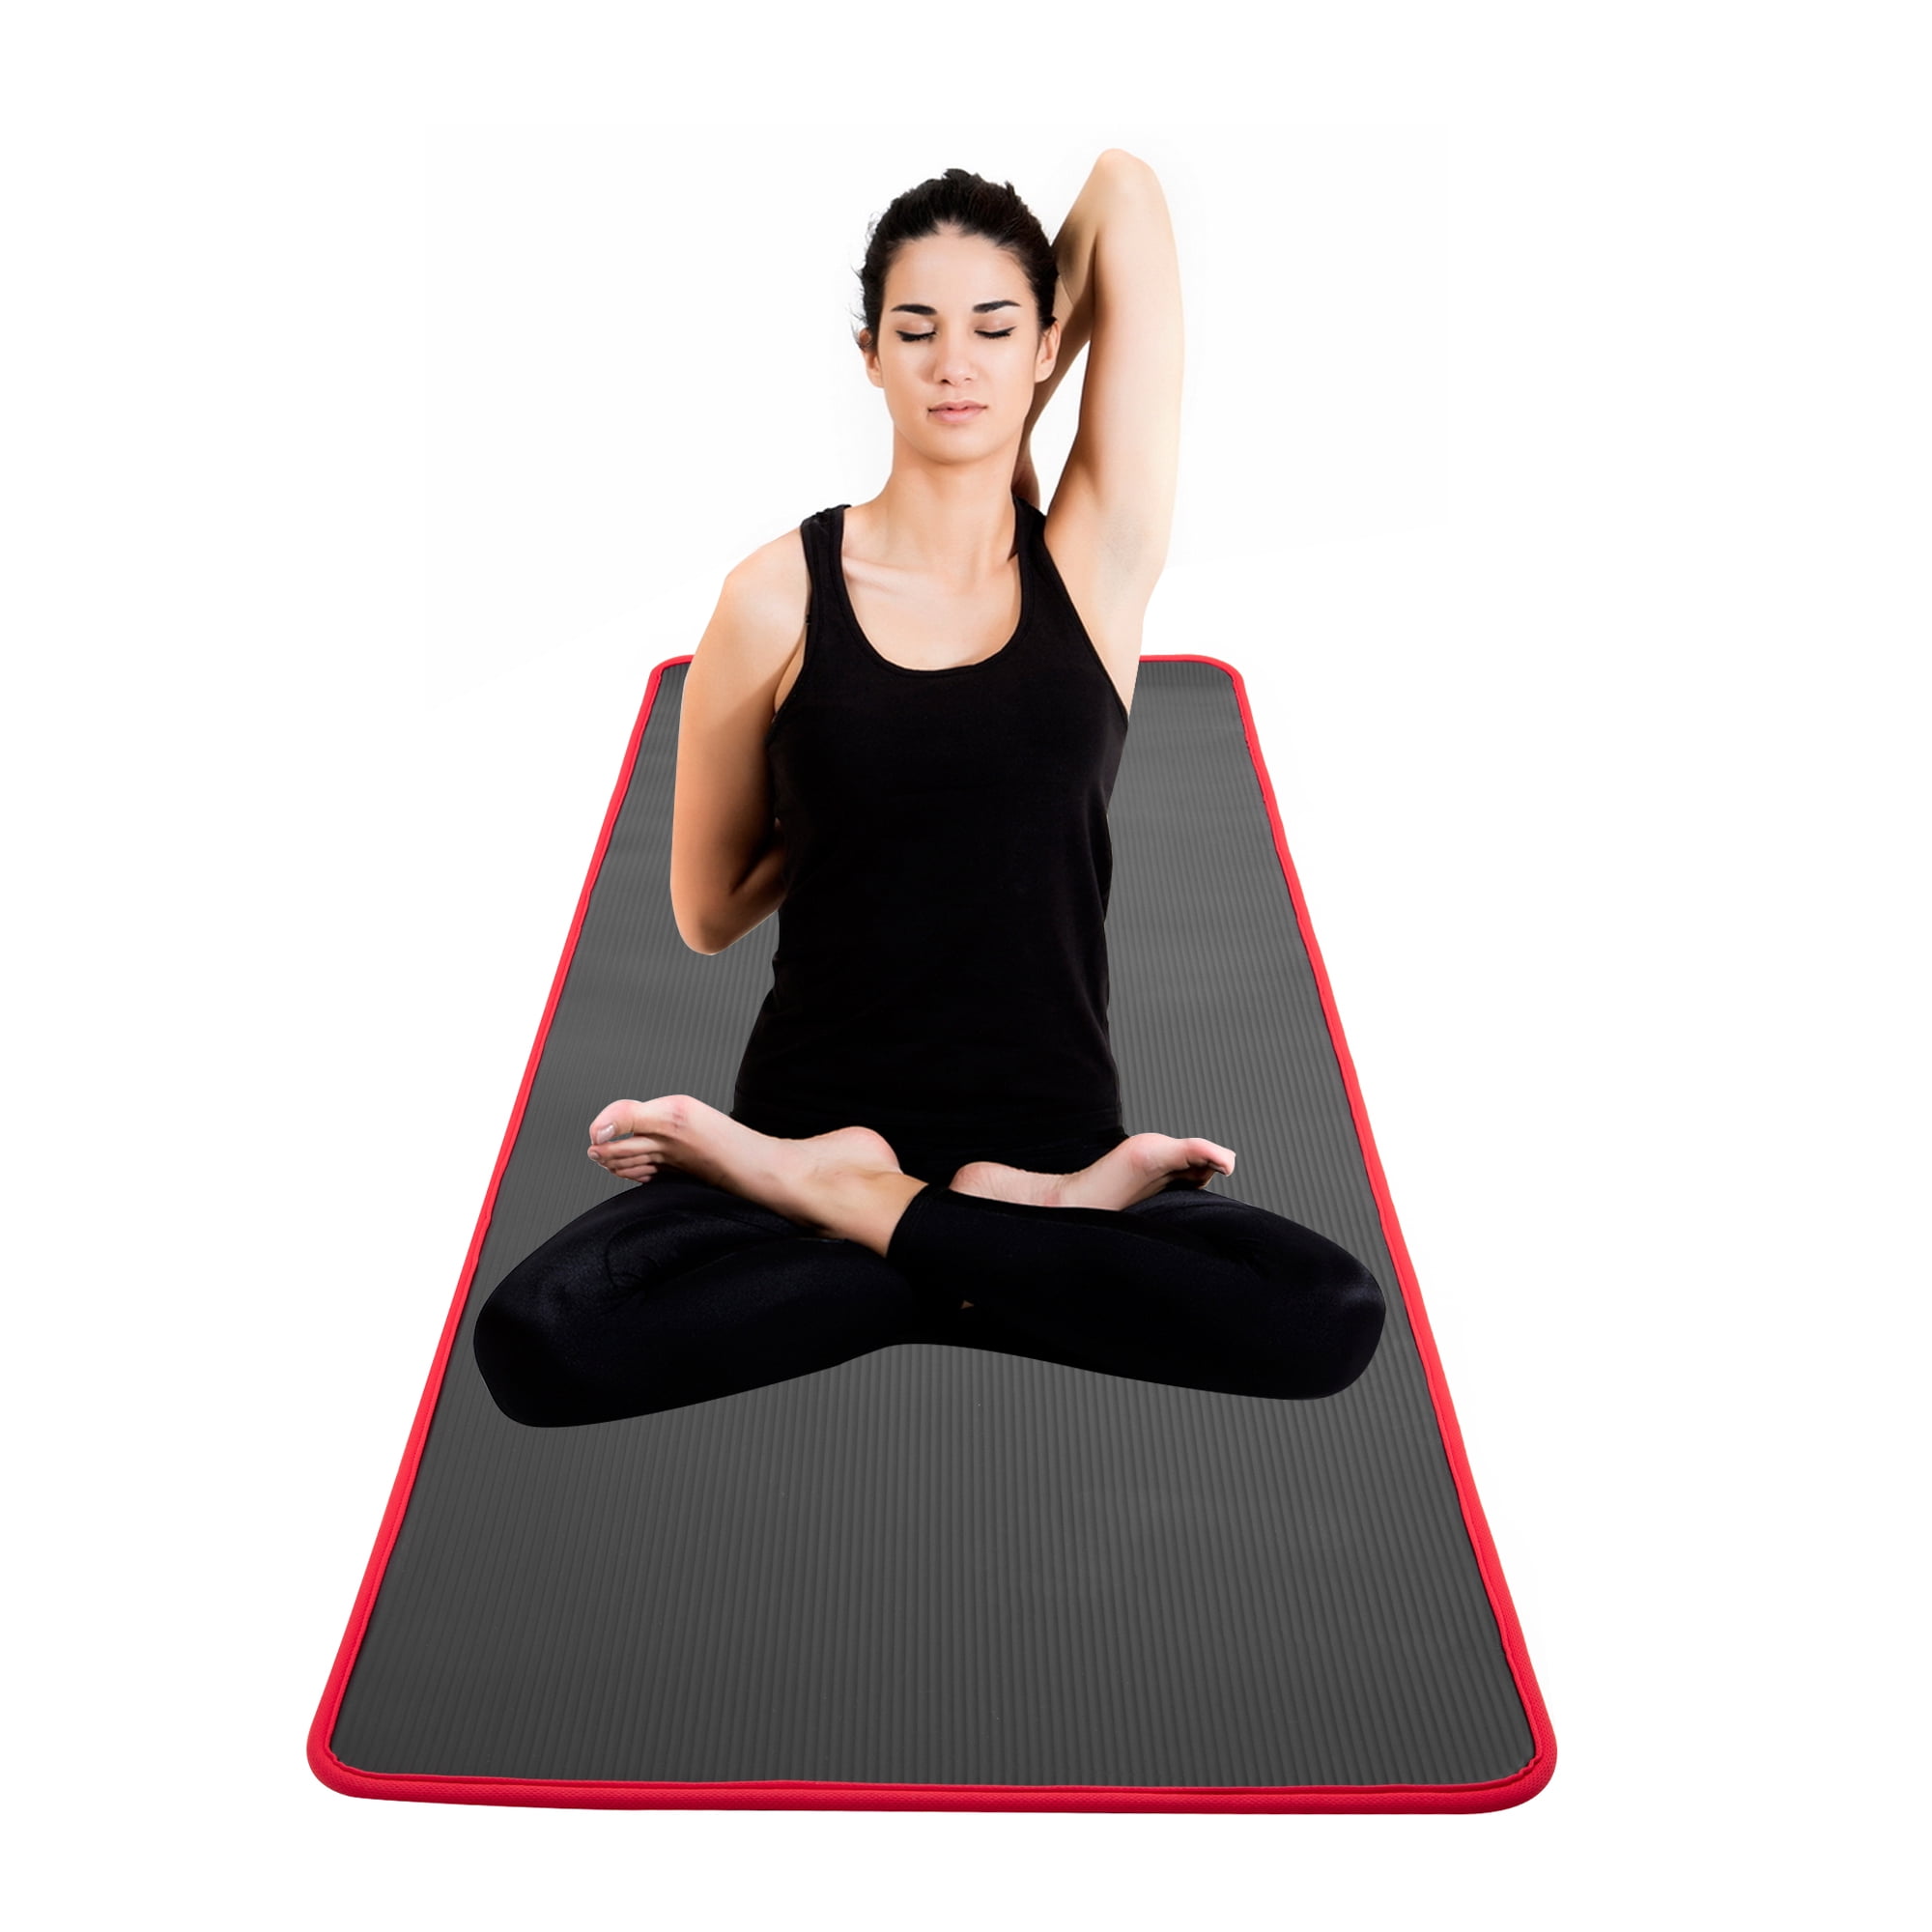 Yoga Mat Exercise Workout Yoga Mat 6mm Extra Thick Cushion Mat Doublesided Non Slip Best Fitness TPE Yoga Mat for Women 72 x 24 